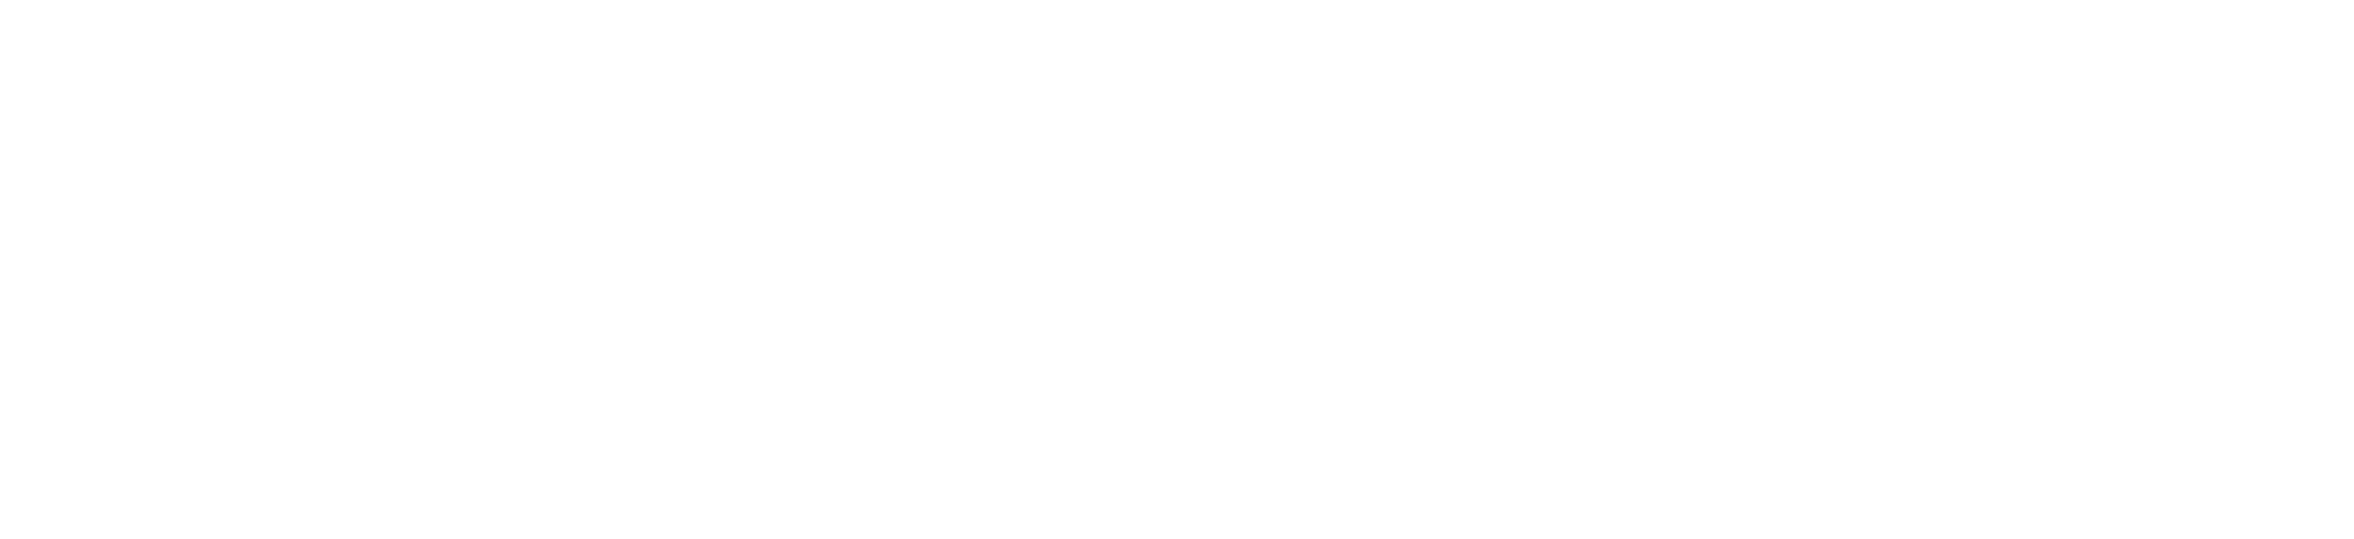 Flaxton Farmers Mutual Fire Insurance Company